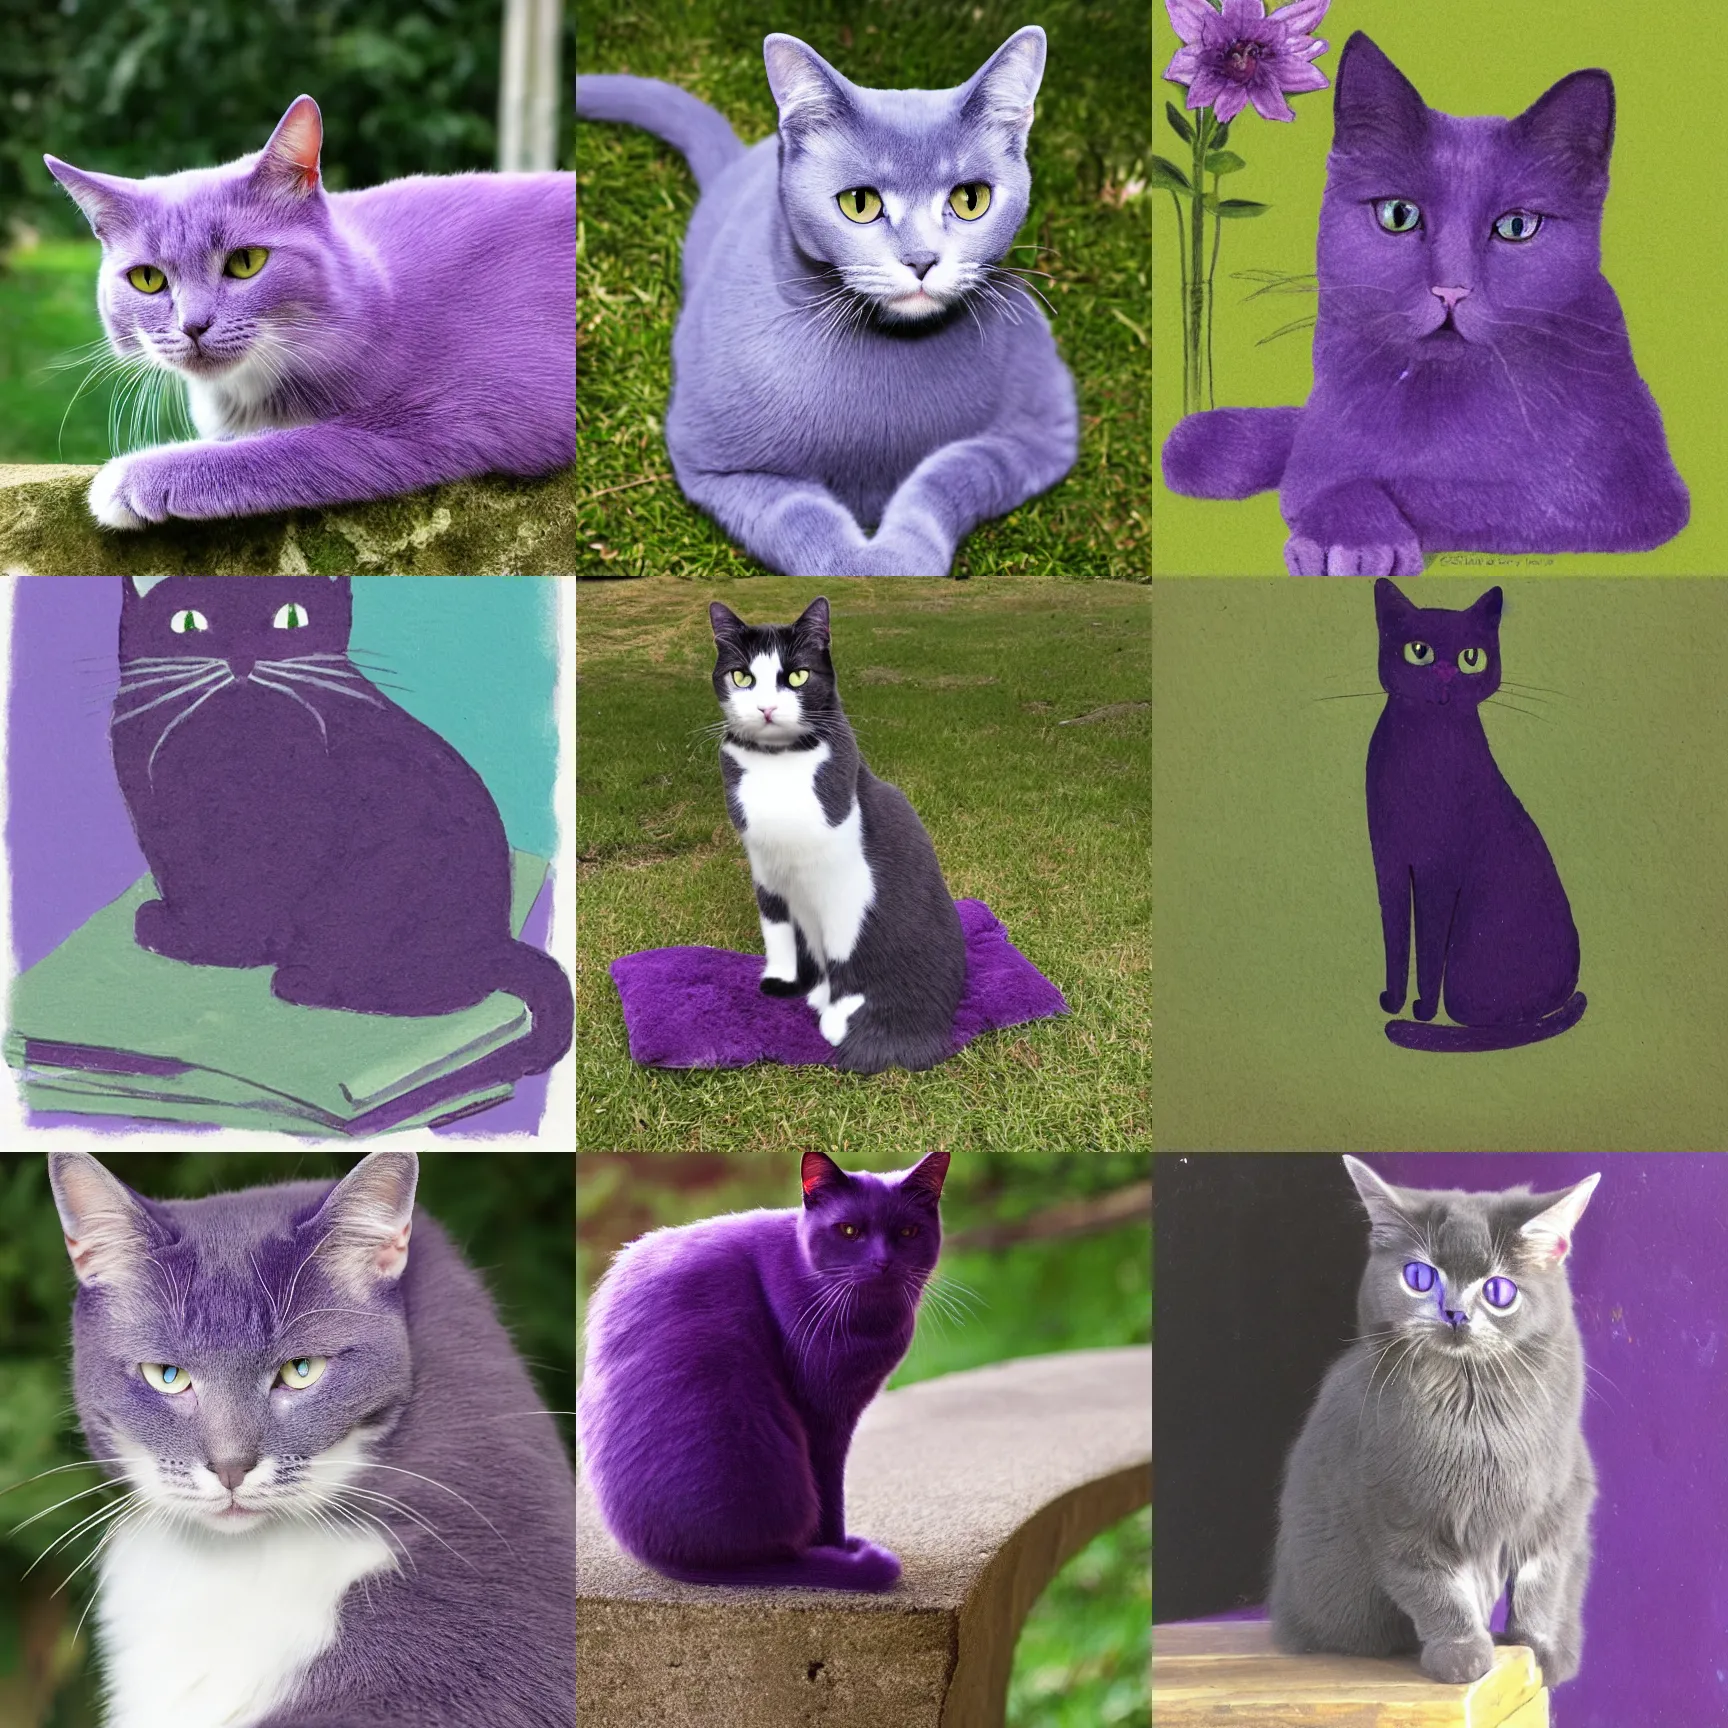 Prompt: a purple cat sitting